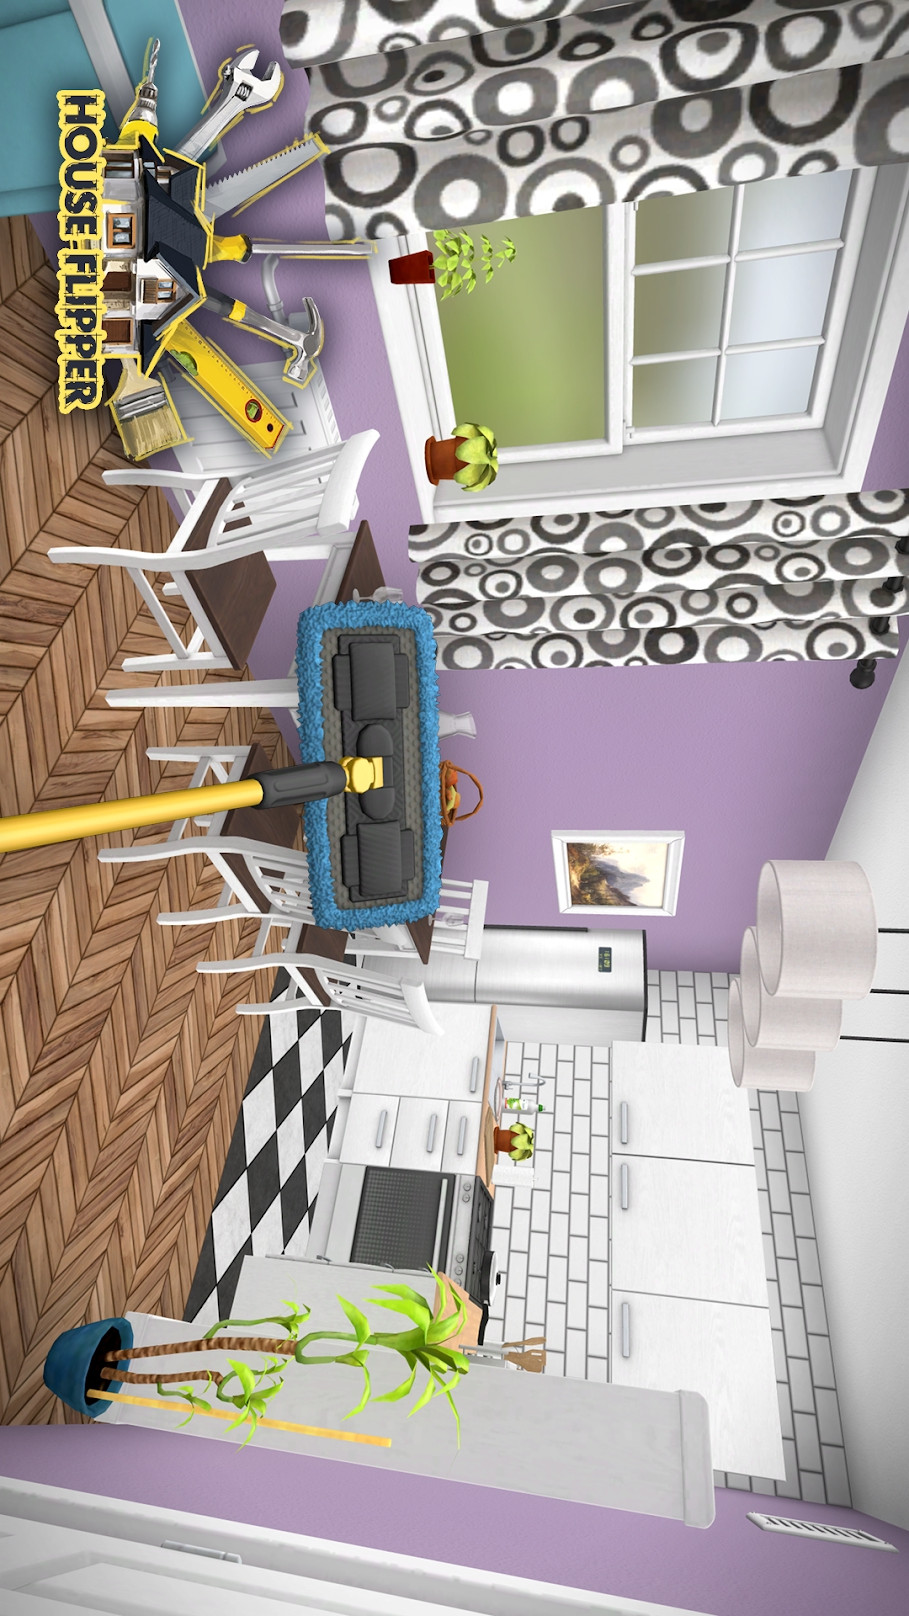 House Flipper: Home Design & Simulator Games(Mod)